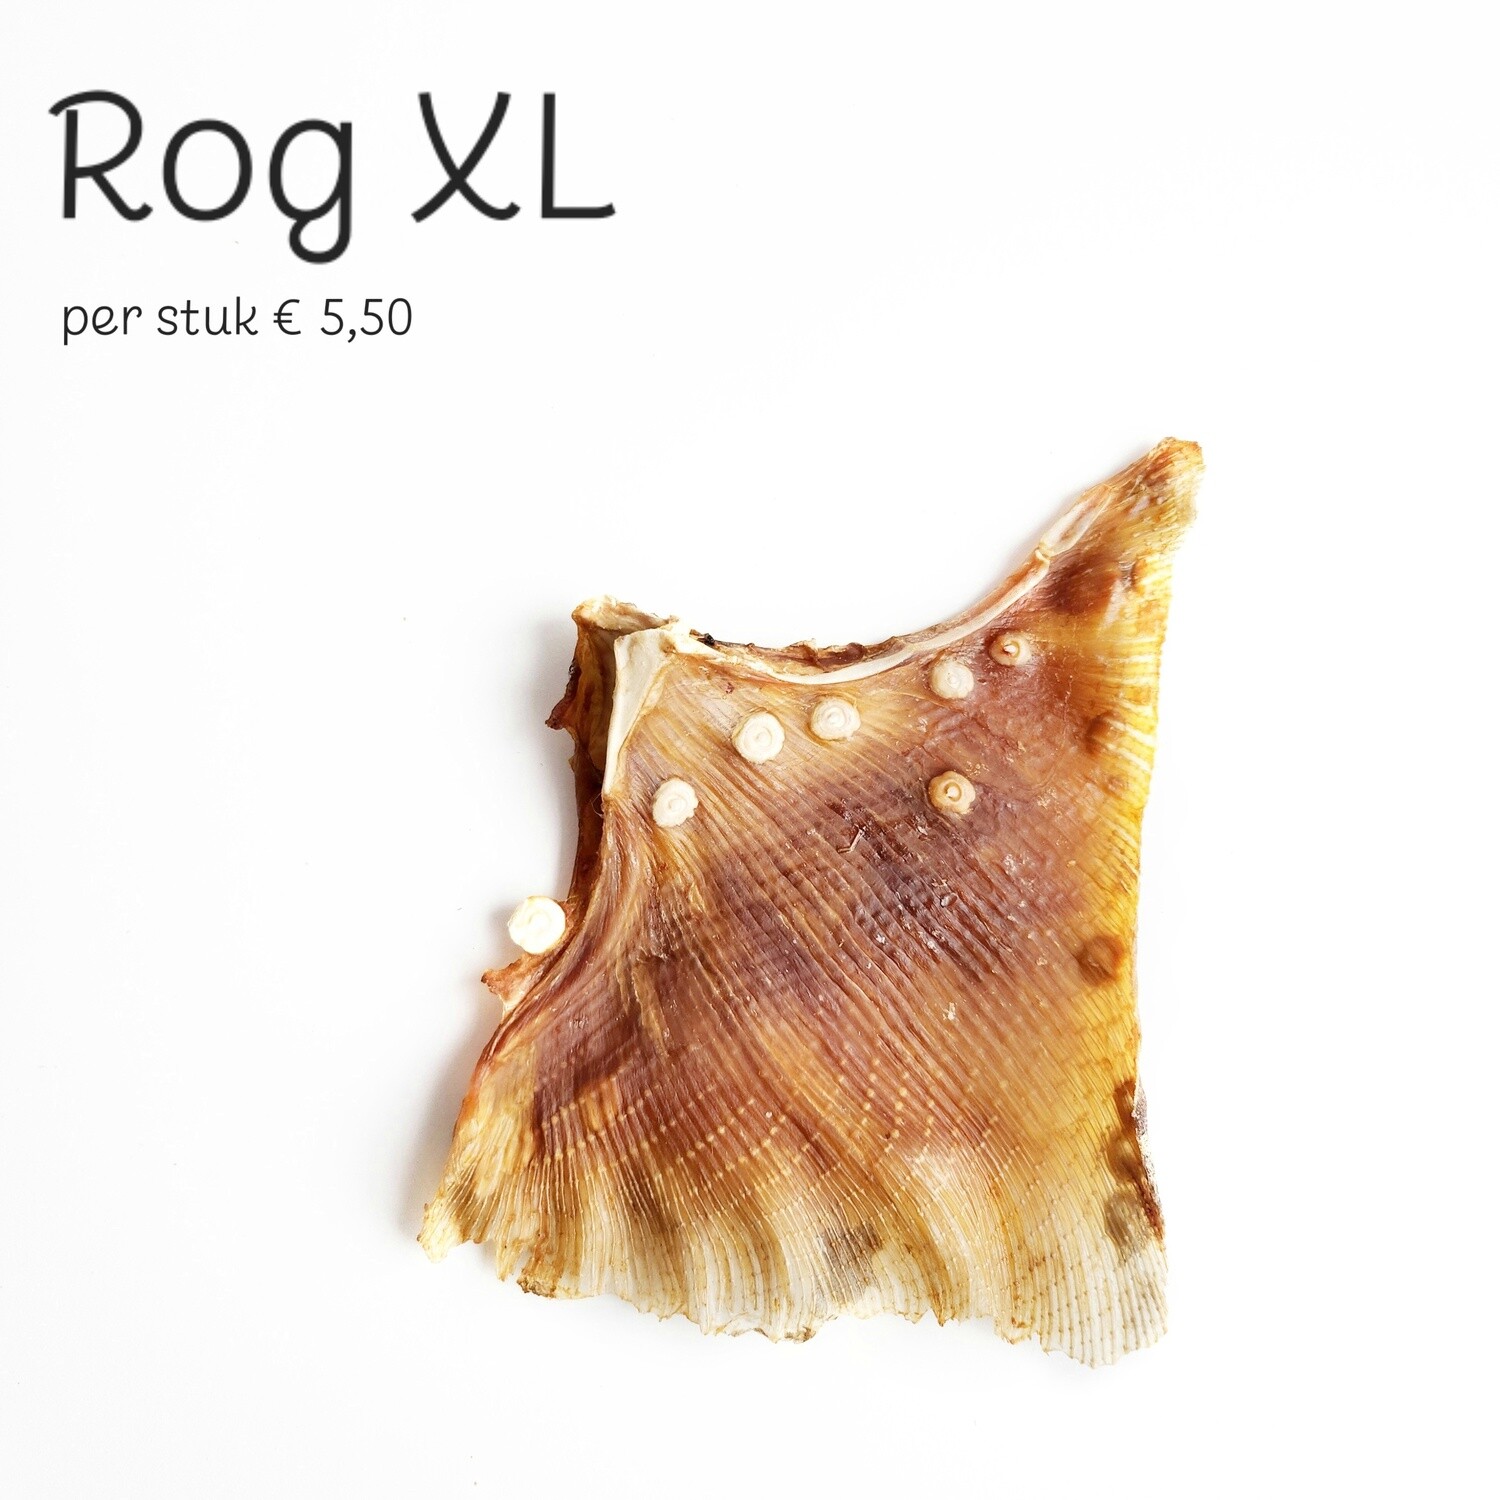 rog XL